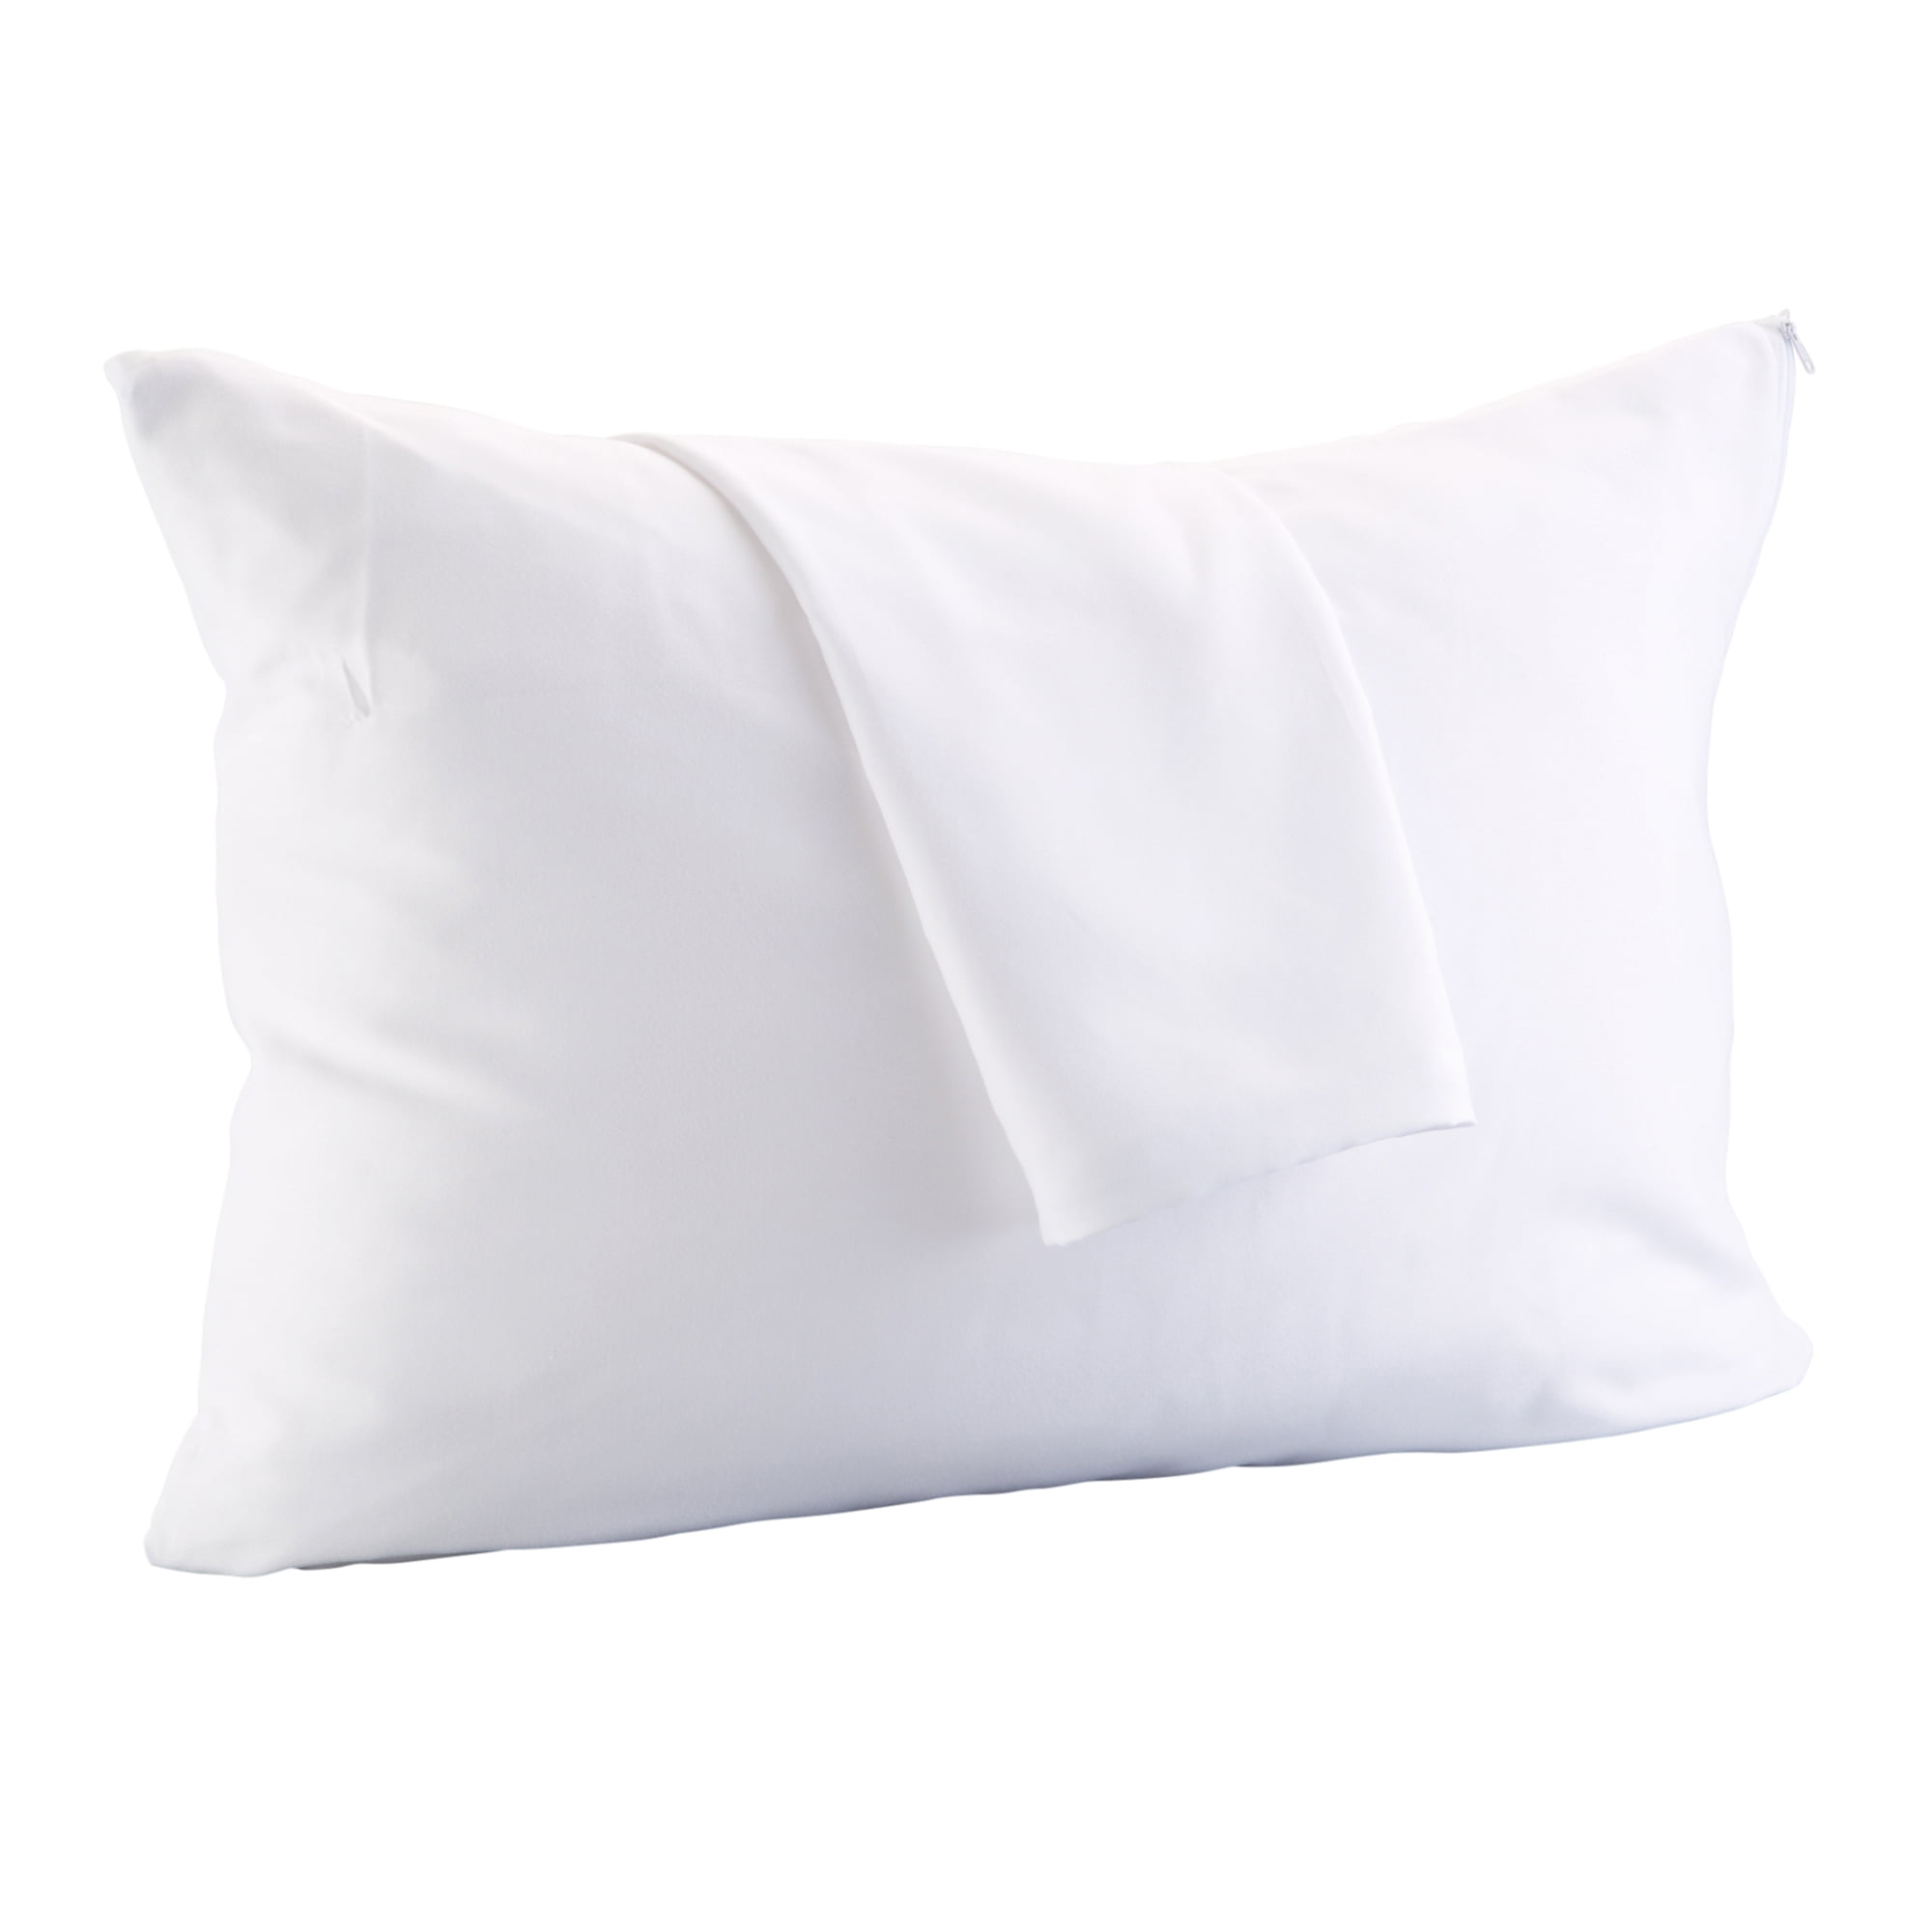 Silentnights 2 X Anti-Allergy Pair of Pillow Protectors Hygienic Night's Sleep 